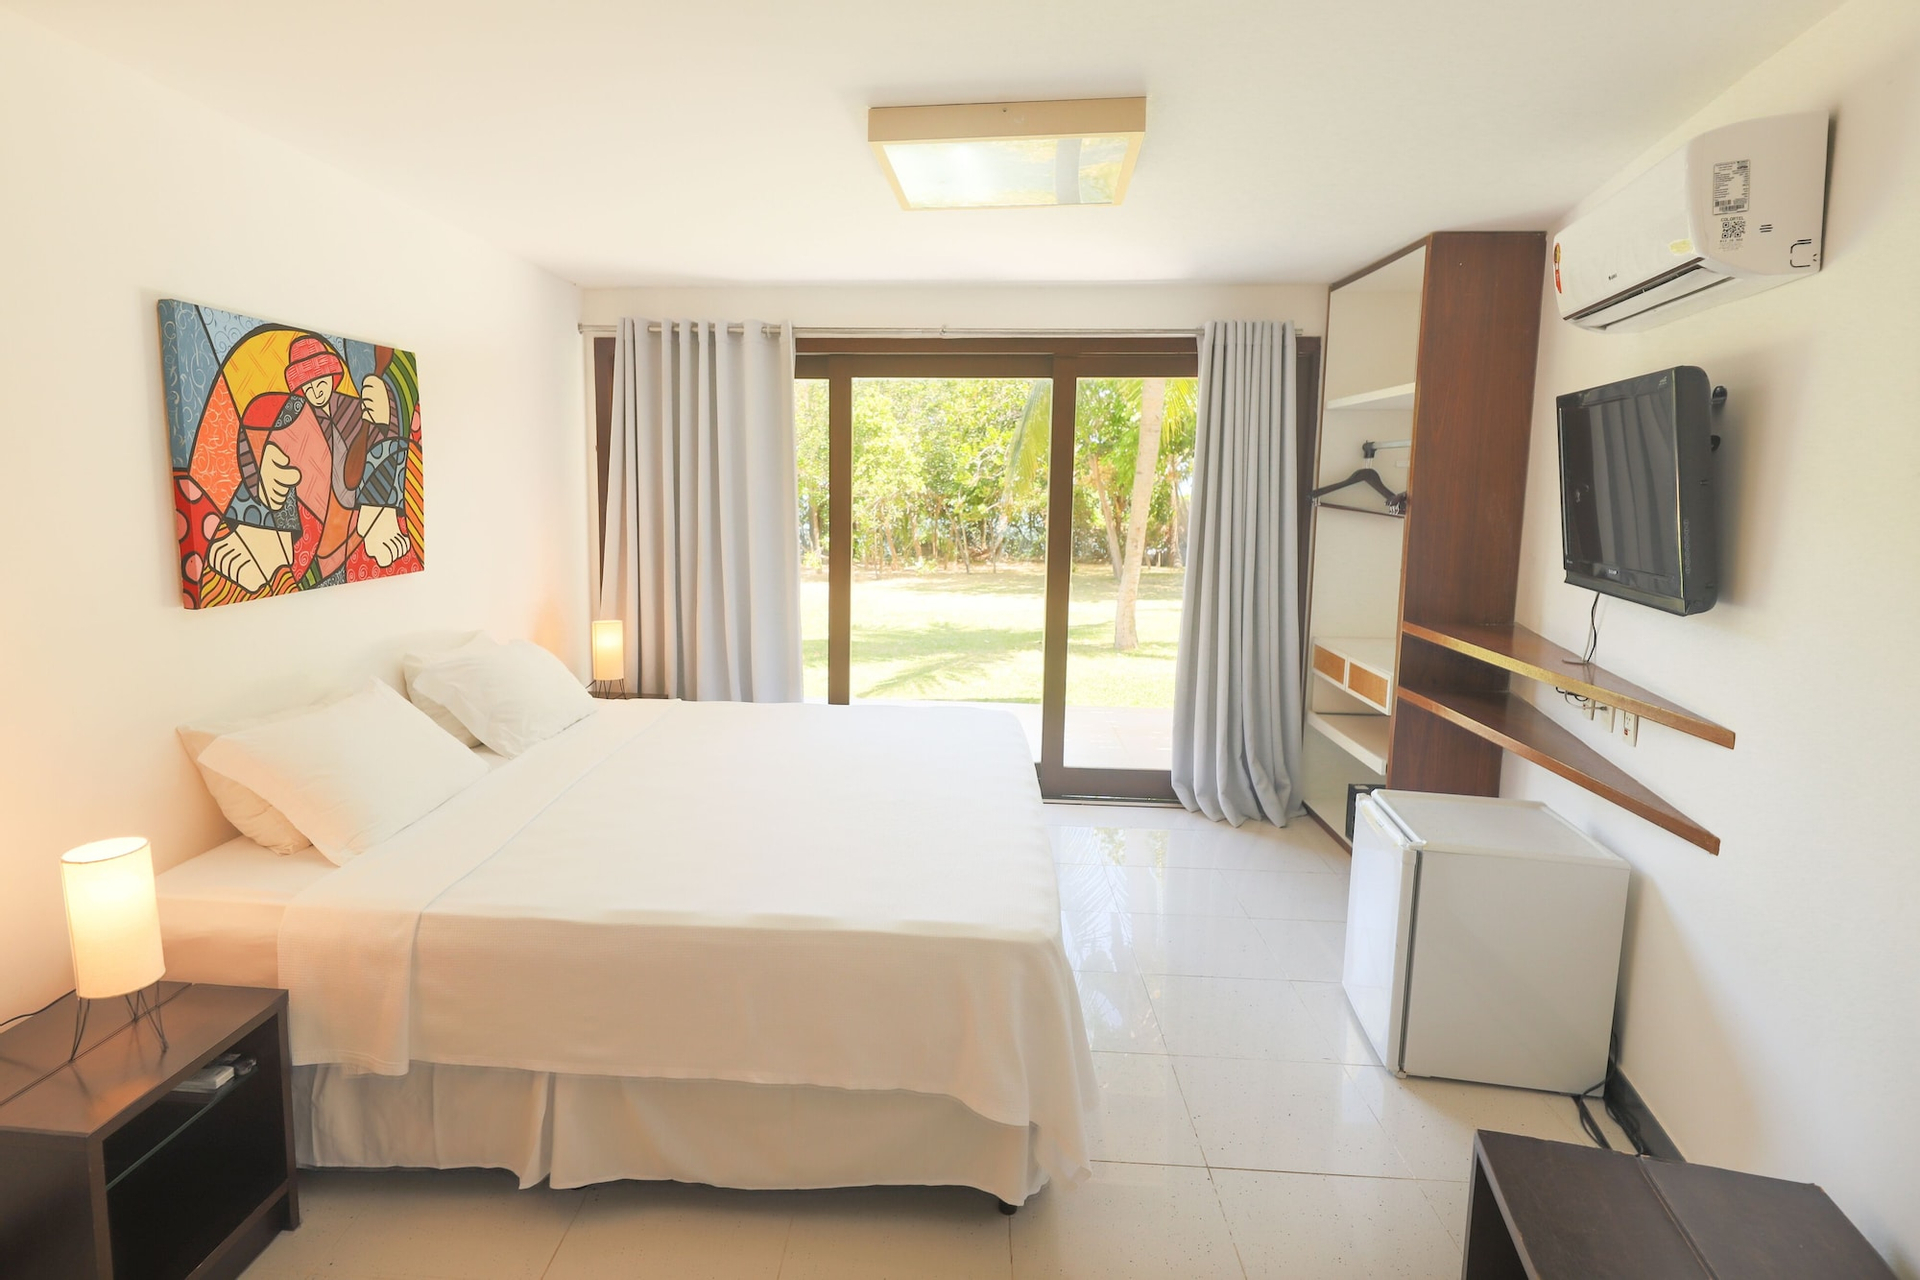 Bedroom 3, Sun Bay Pipa Hoteis, Tibau do Sul